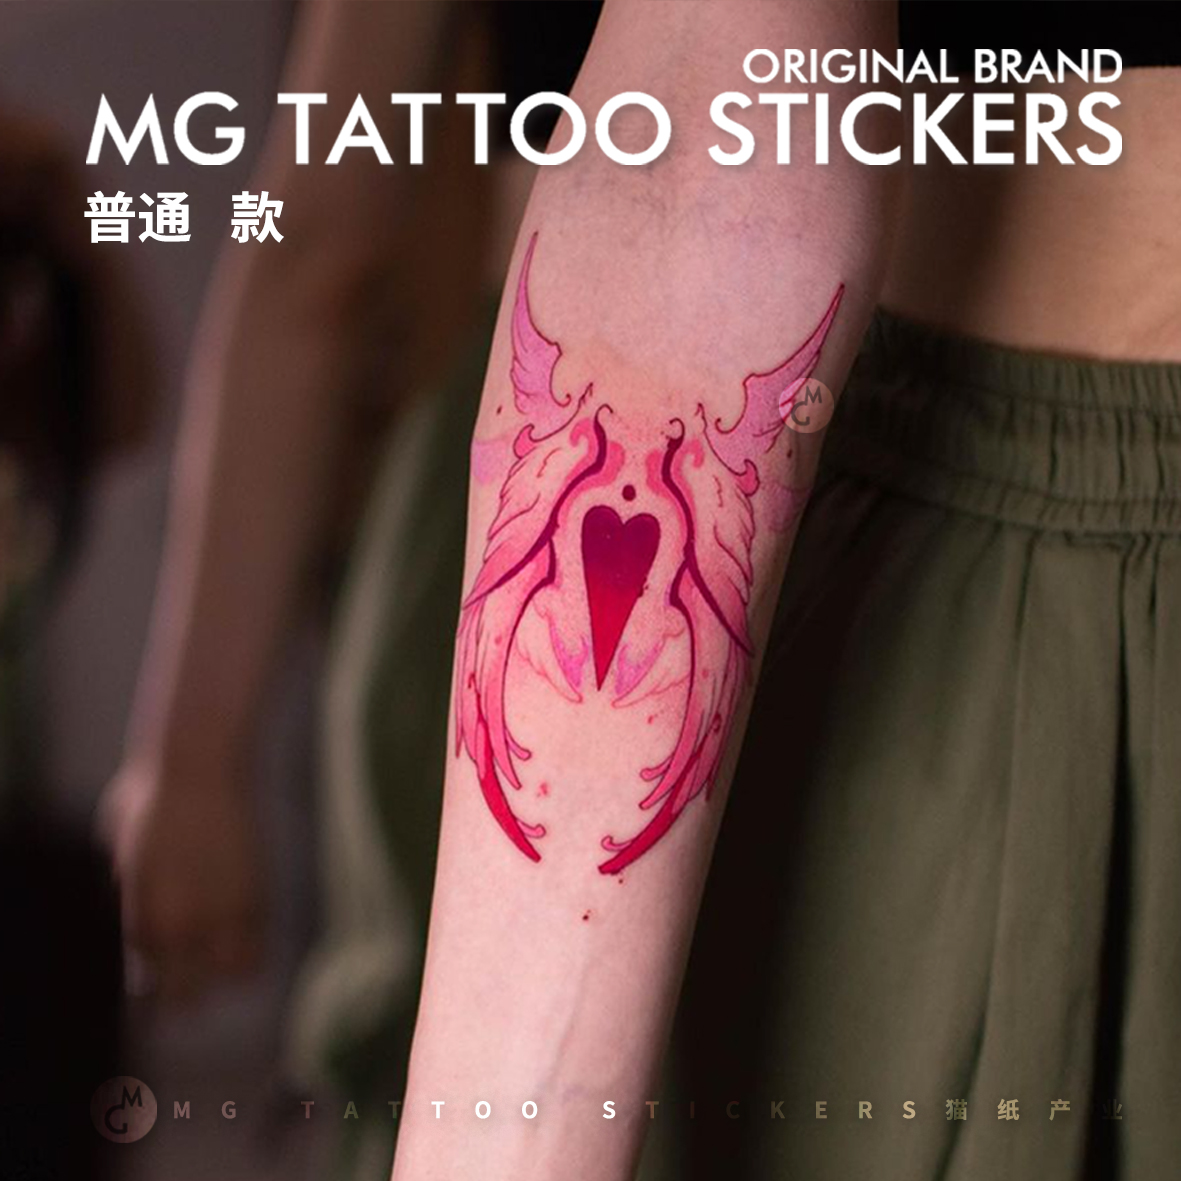 MG tattoo 天使之心日系唯美粉色天使翅膀图案手臂小腿防水纹身贴